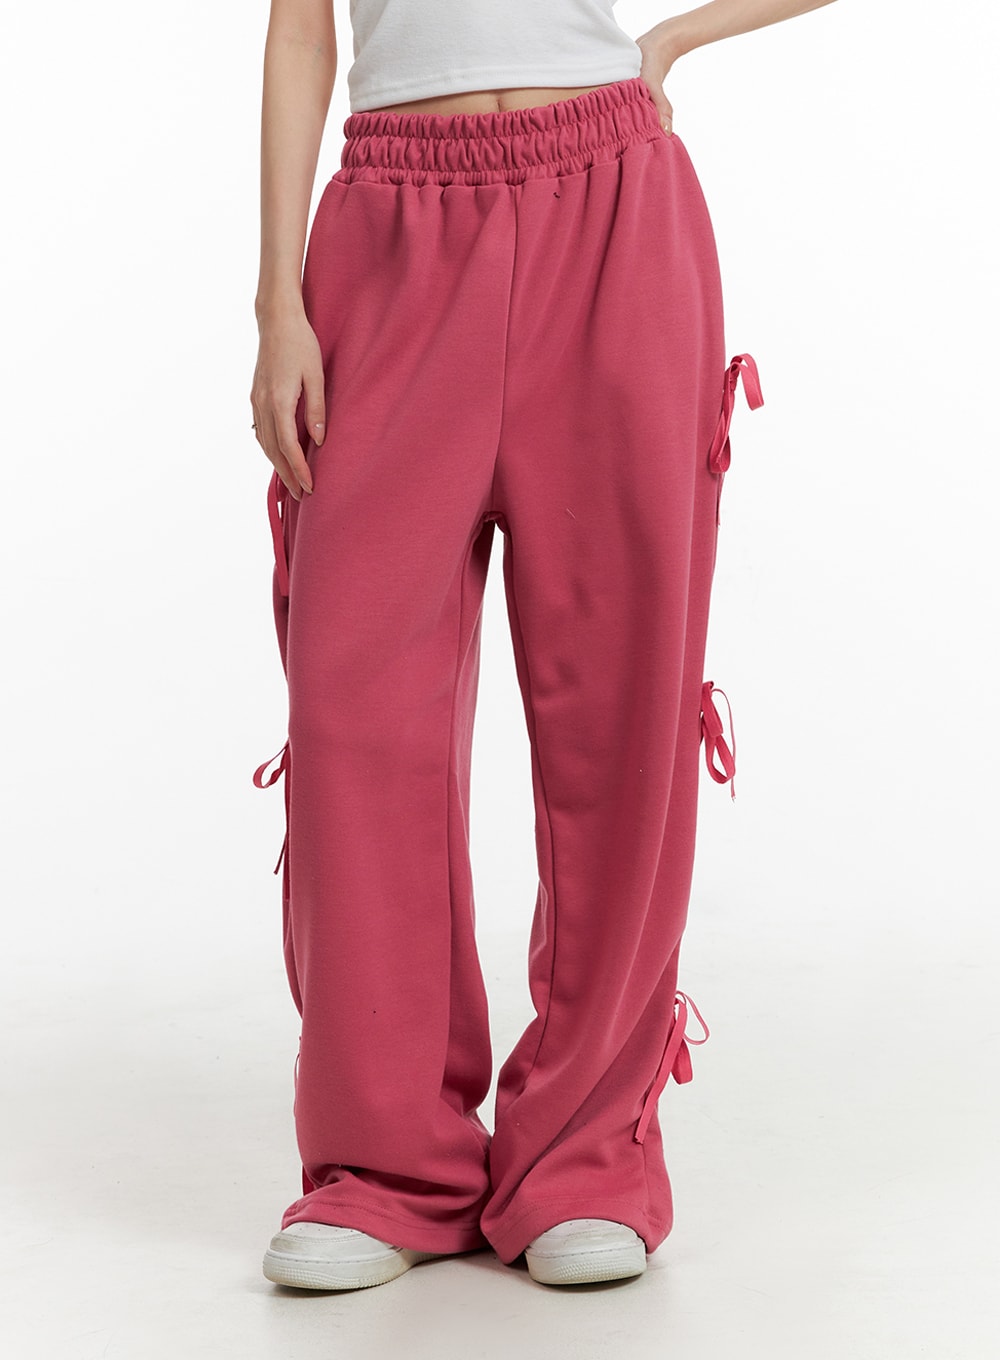 Nap Loungewear Women's Balloon Cotton Sweatpants in Coral Orange